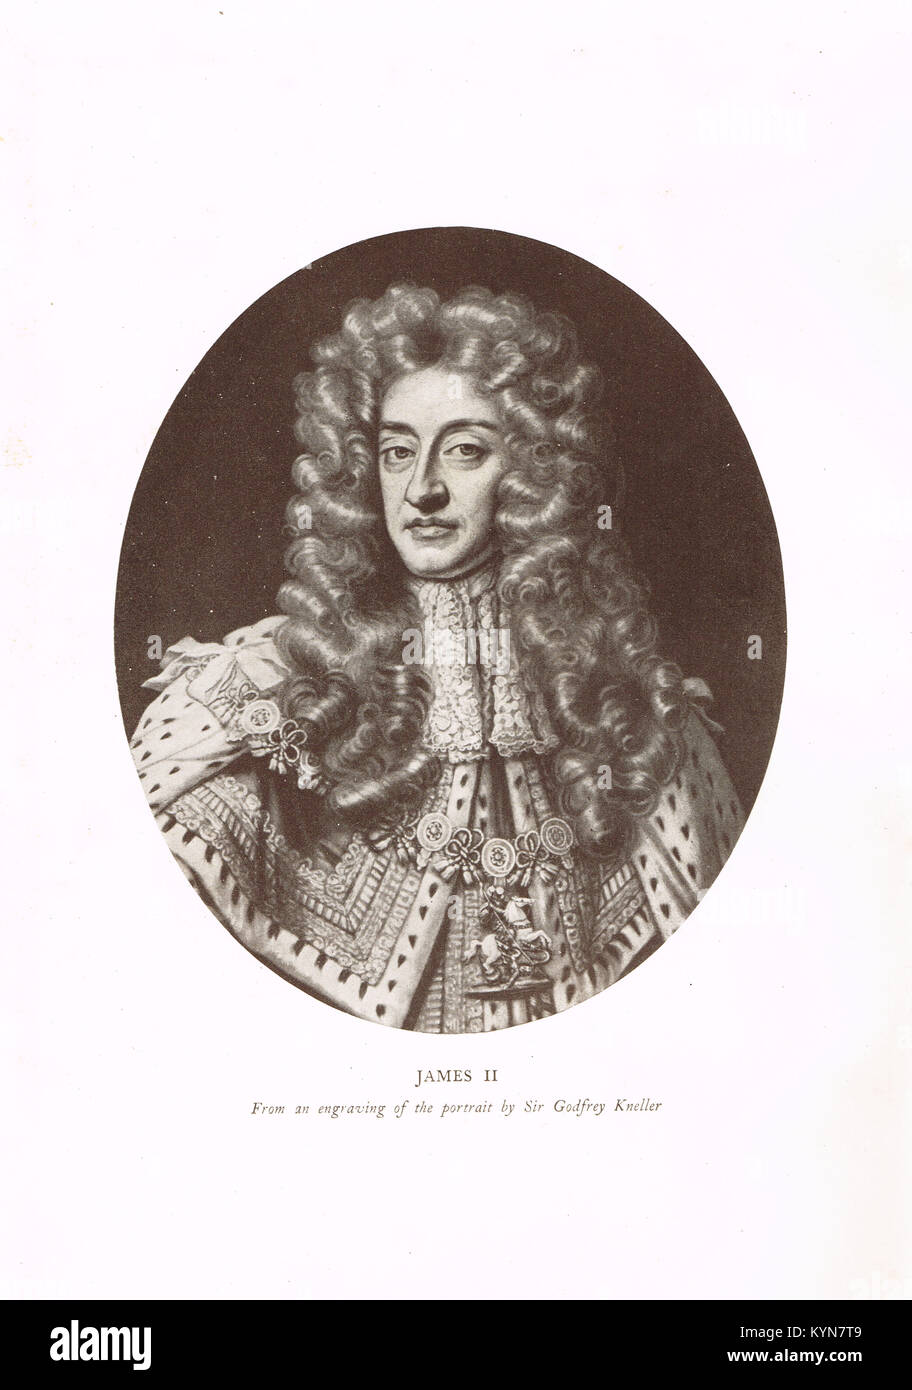 El rey Jaime II de Inglaterra, rey de Escocia como Jacobo VII, 1633-1701, reinó 1685-1688, último monarca Católico de Inglaterra, Escocia e Irlanda Foto de stock